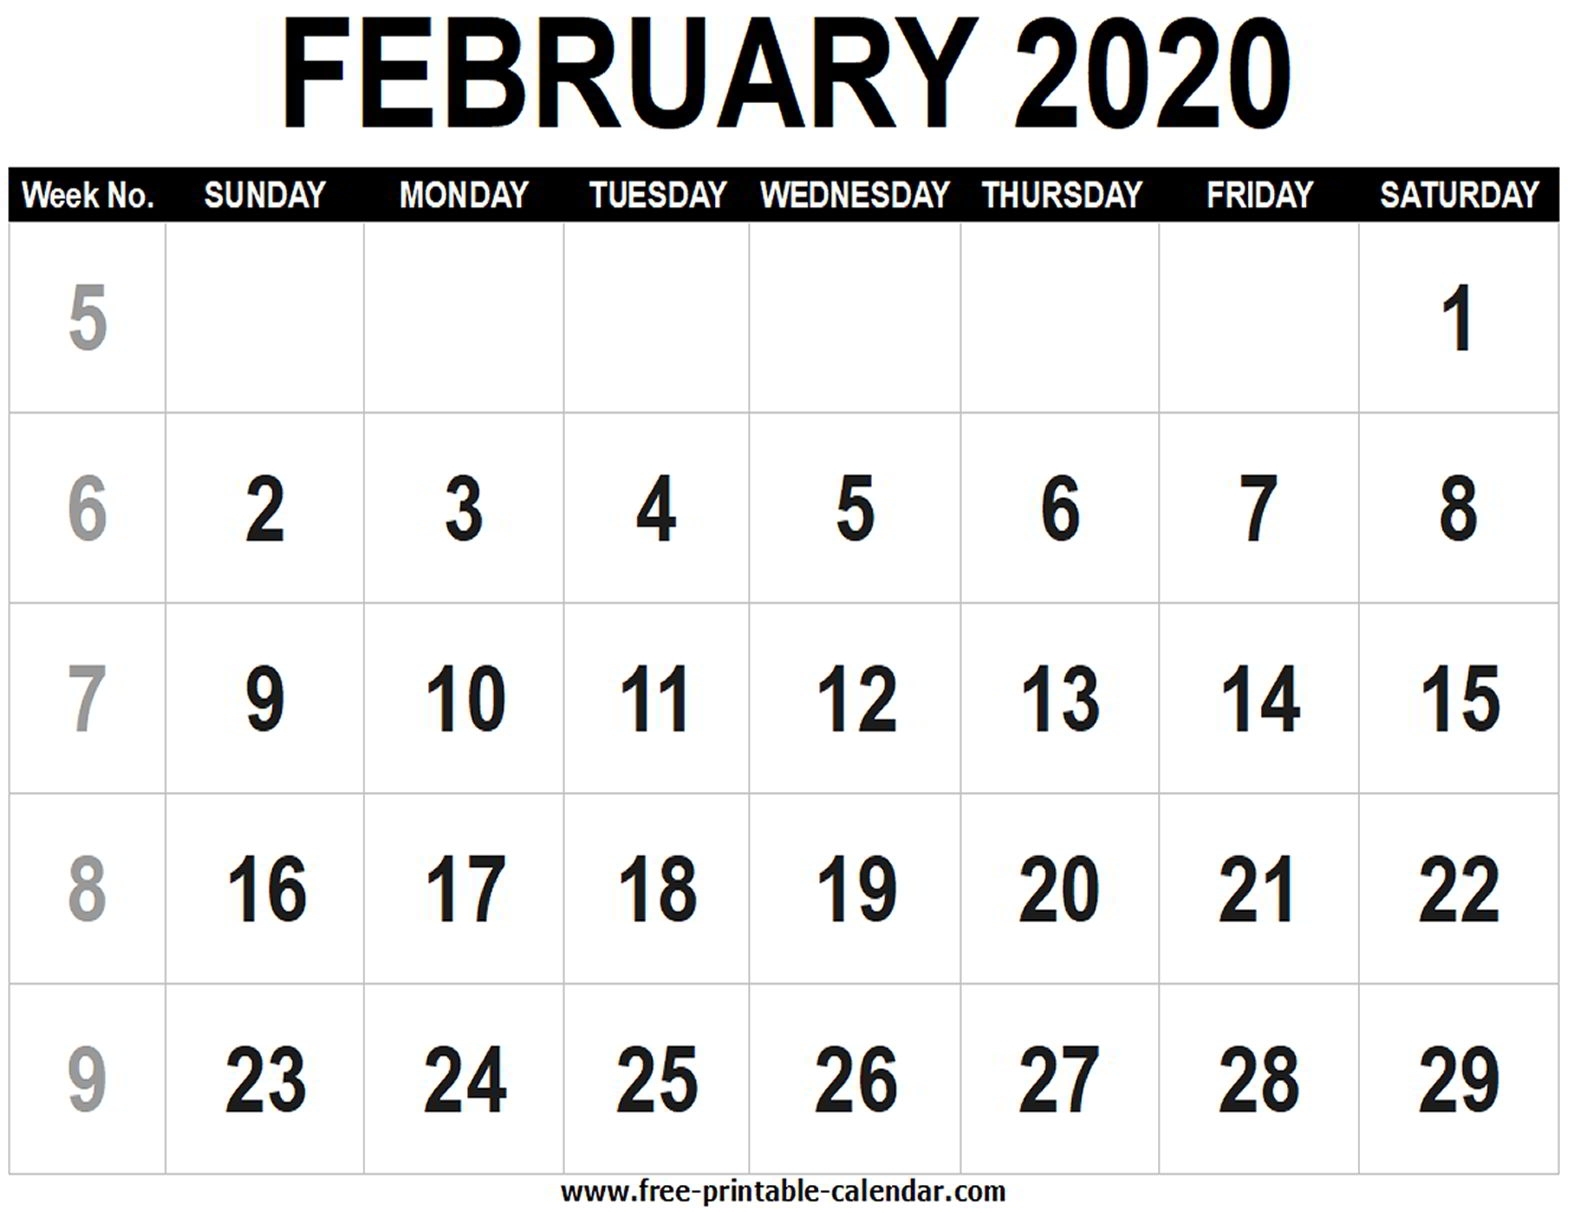 Blank Calendar 2020 February - Free-Printable-Calendar